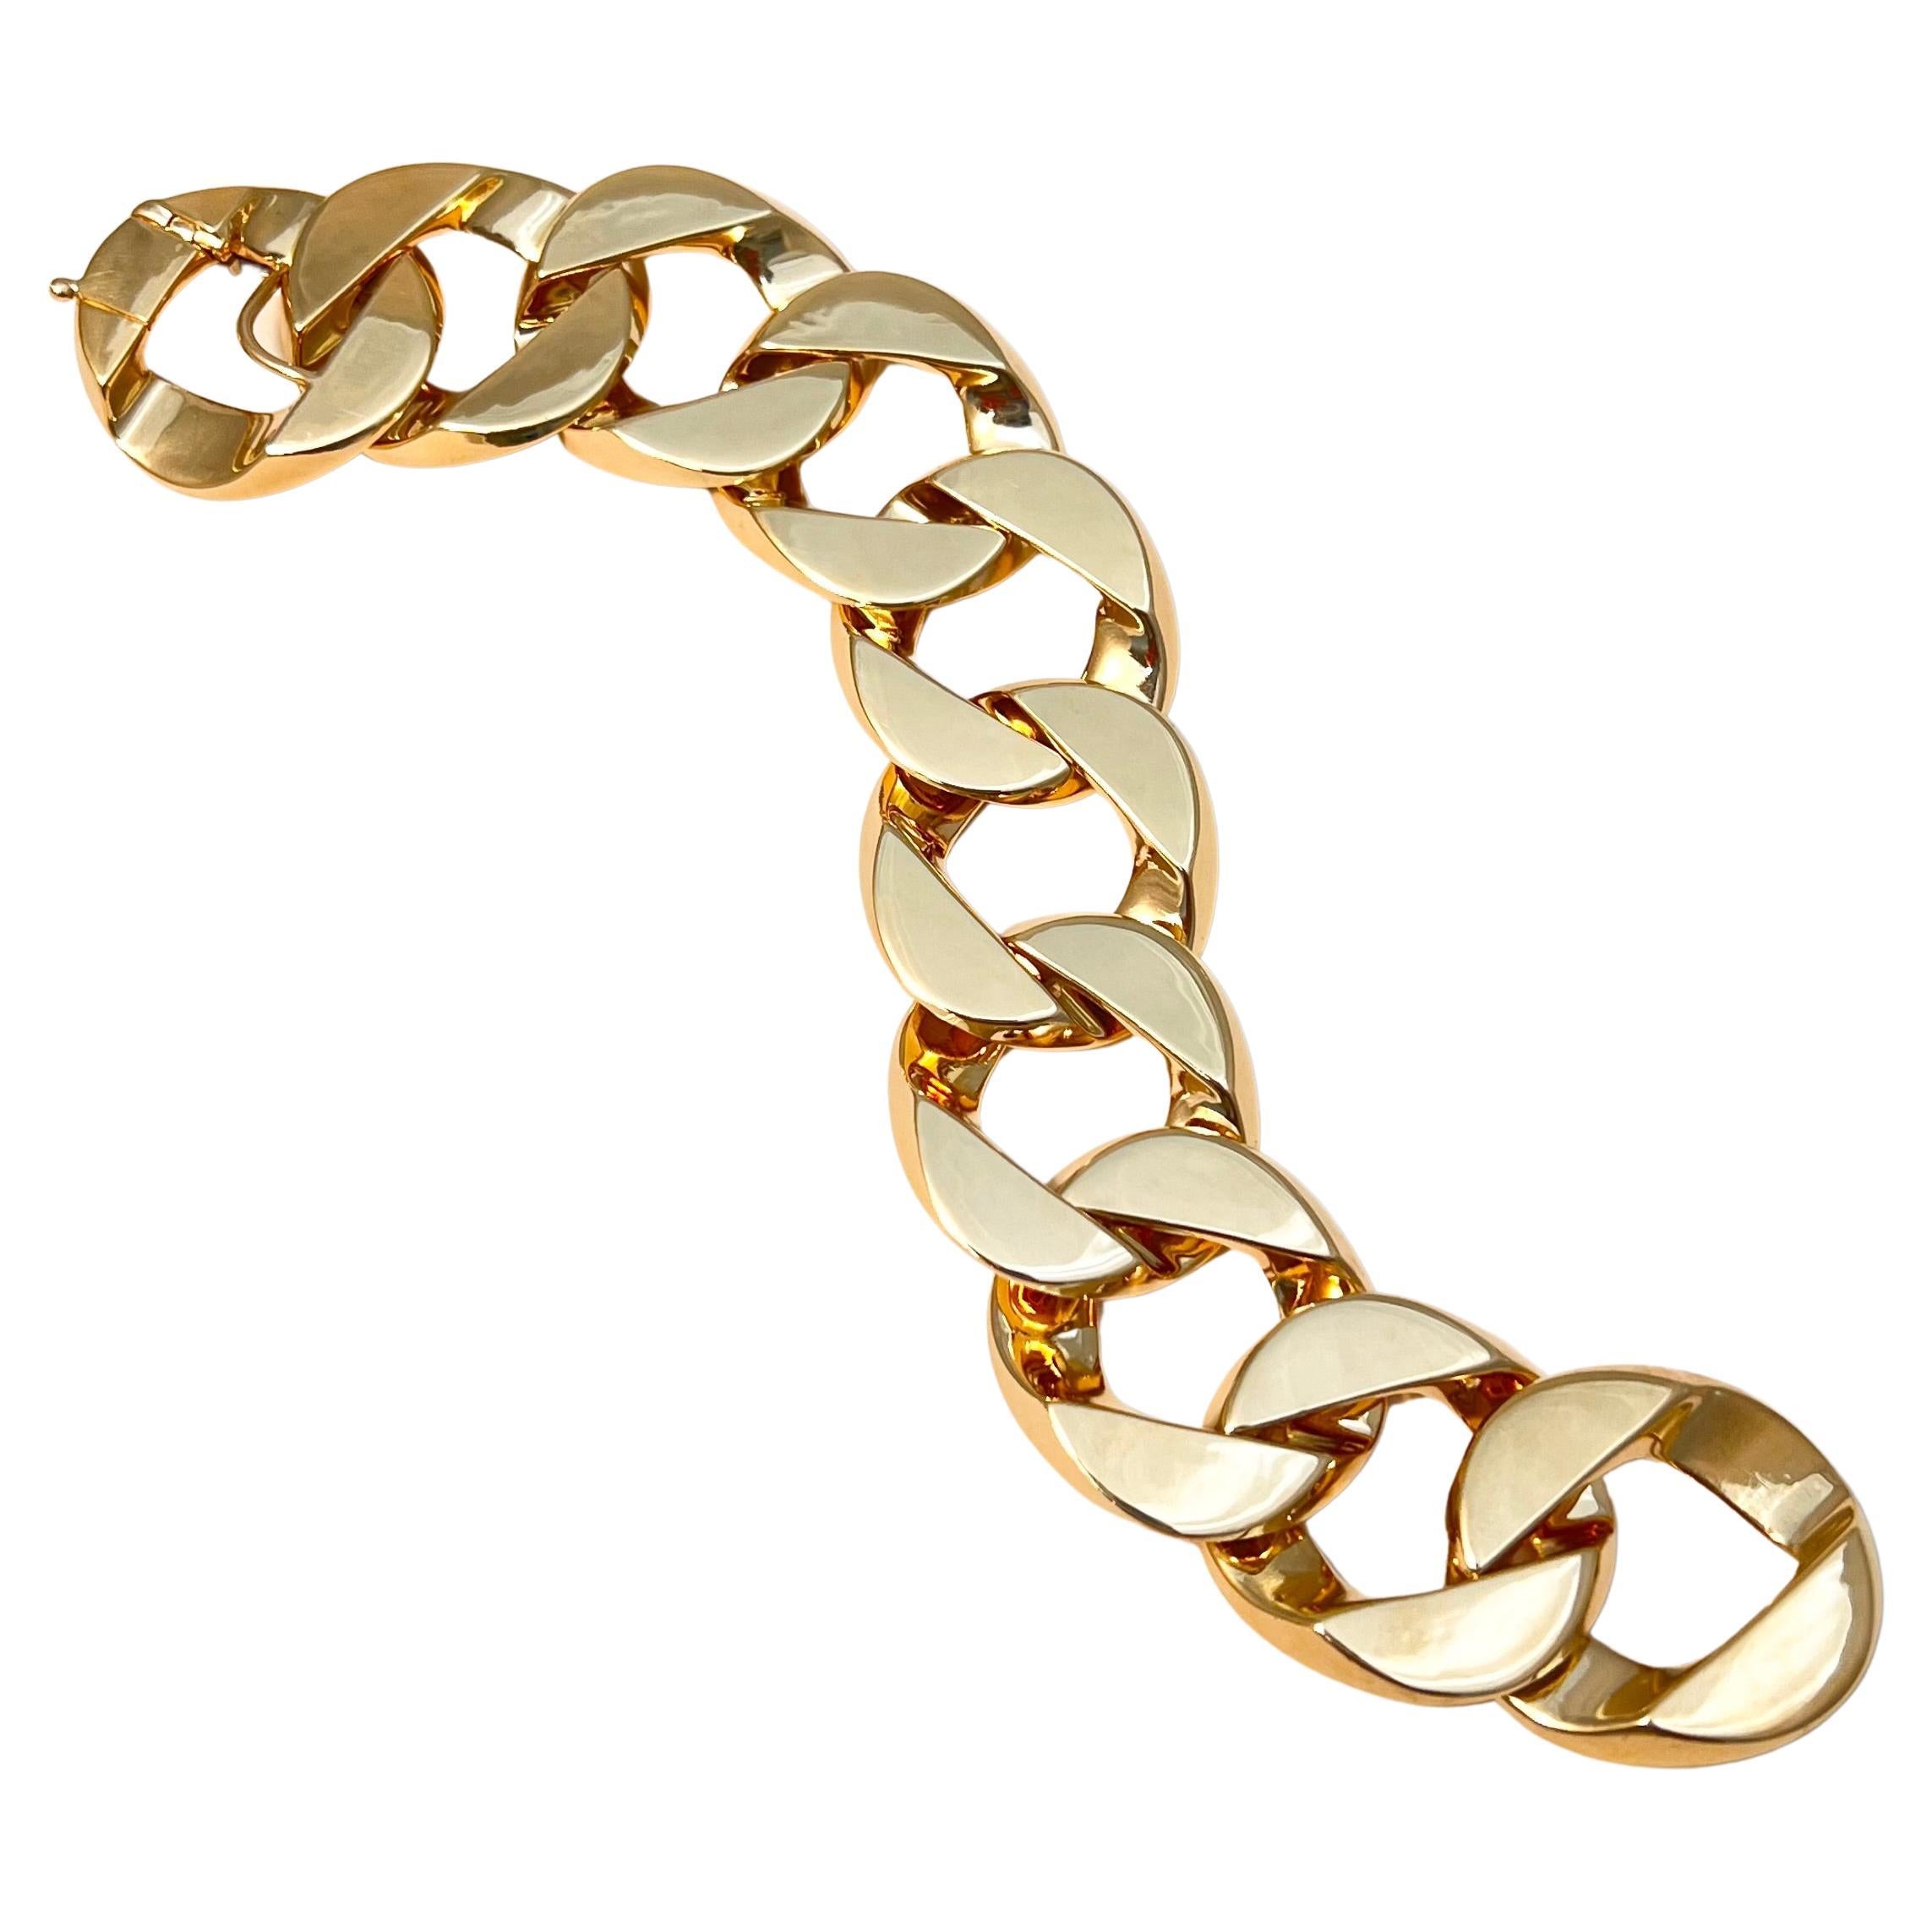 Bracelet figaro 5.75mm en or jaune 14k unisexe pour homme et femme